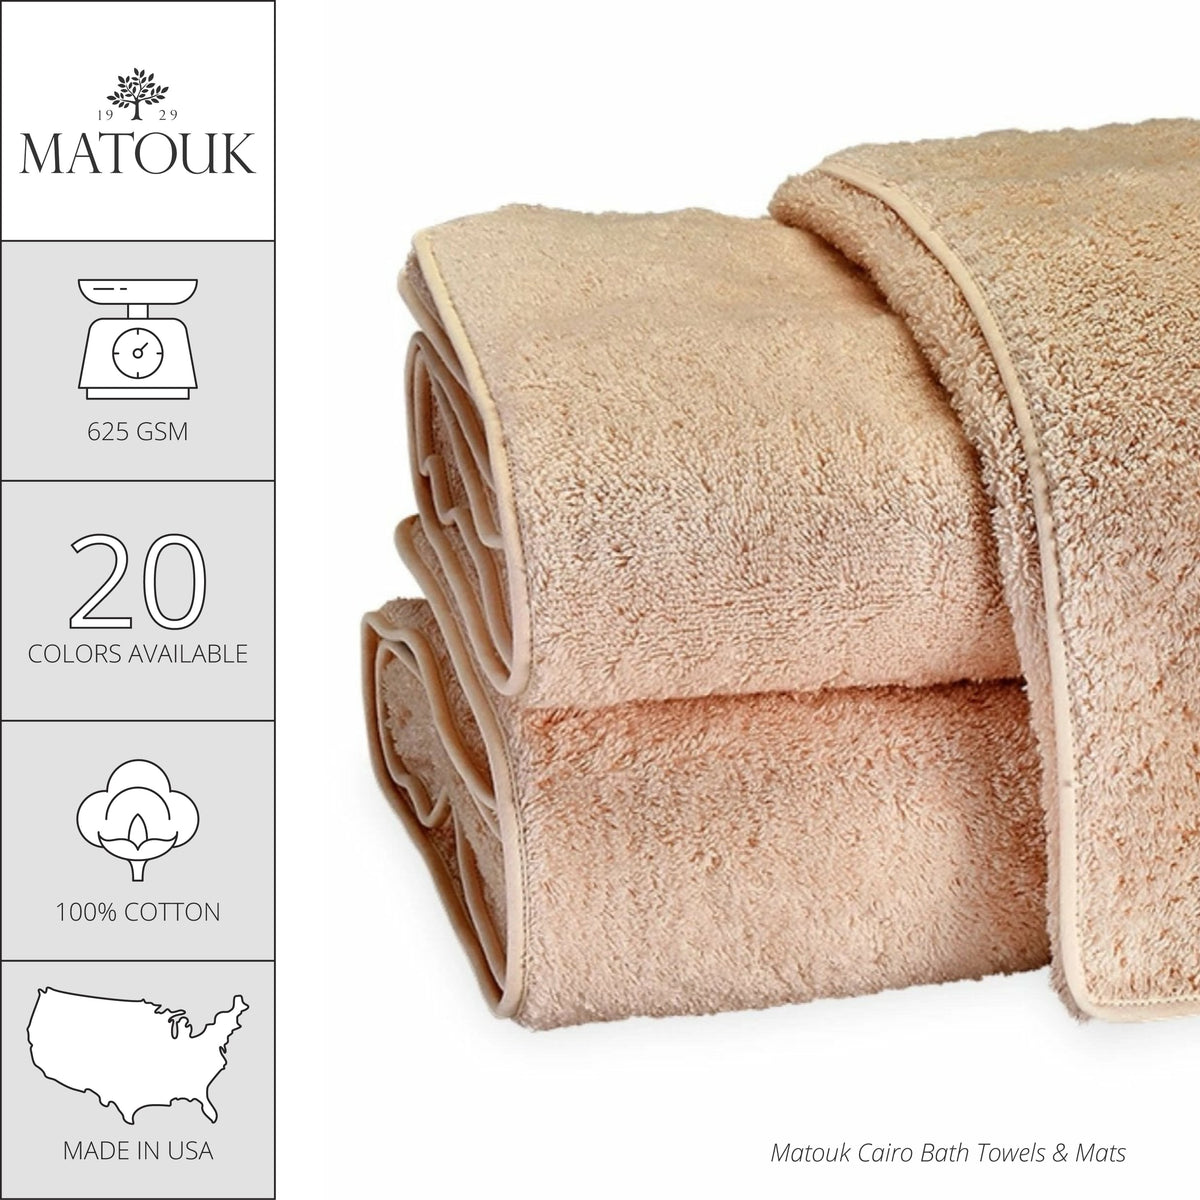 Matouk Cairo Bath Towels and Mats - White/Black